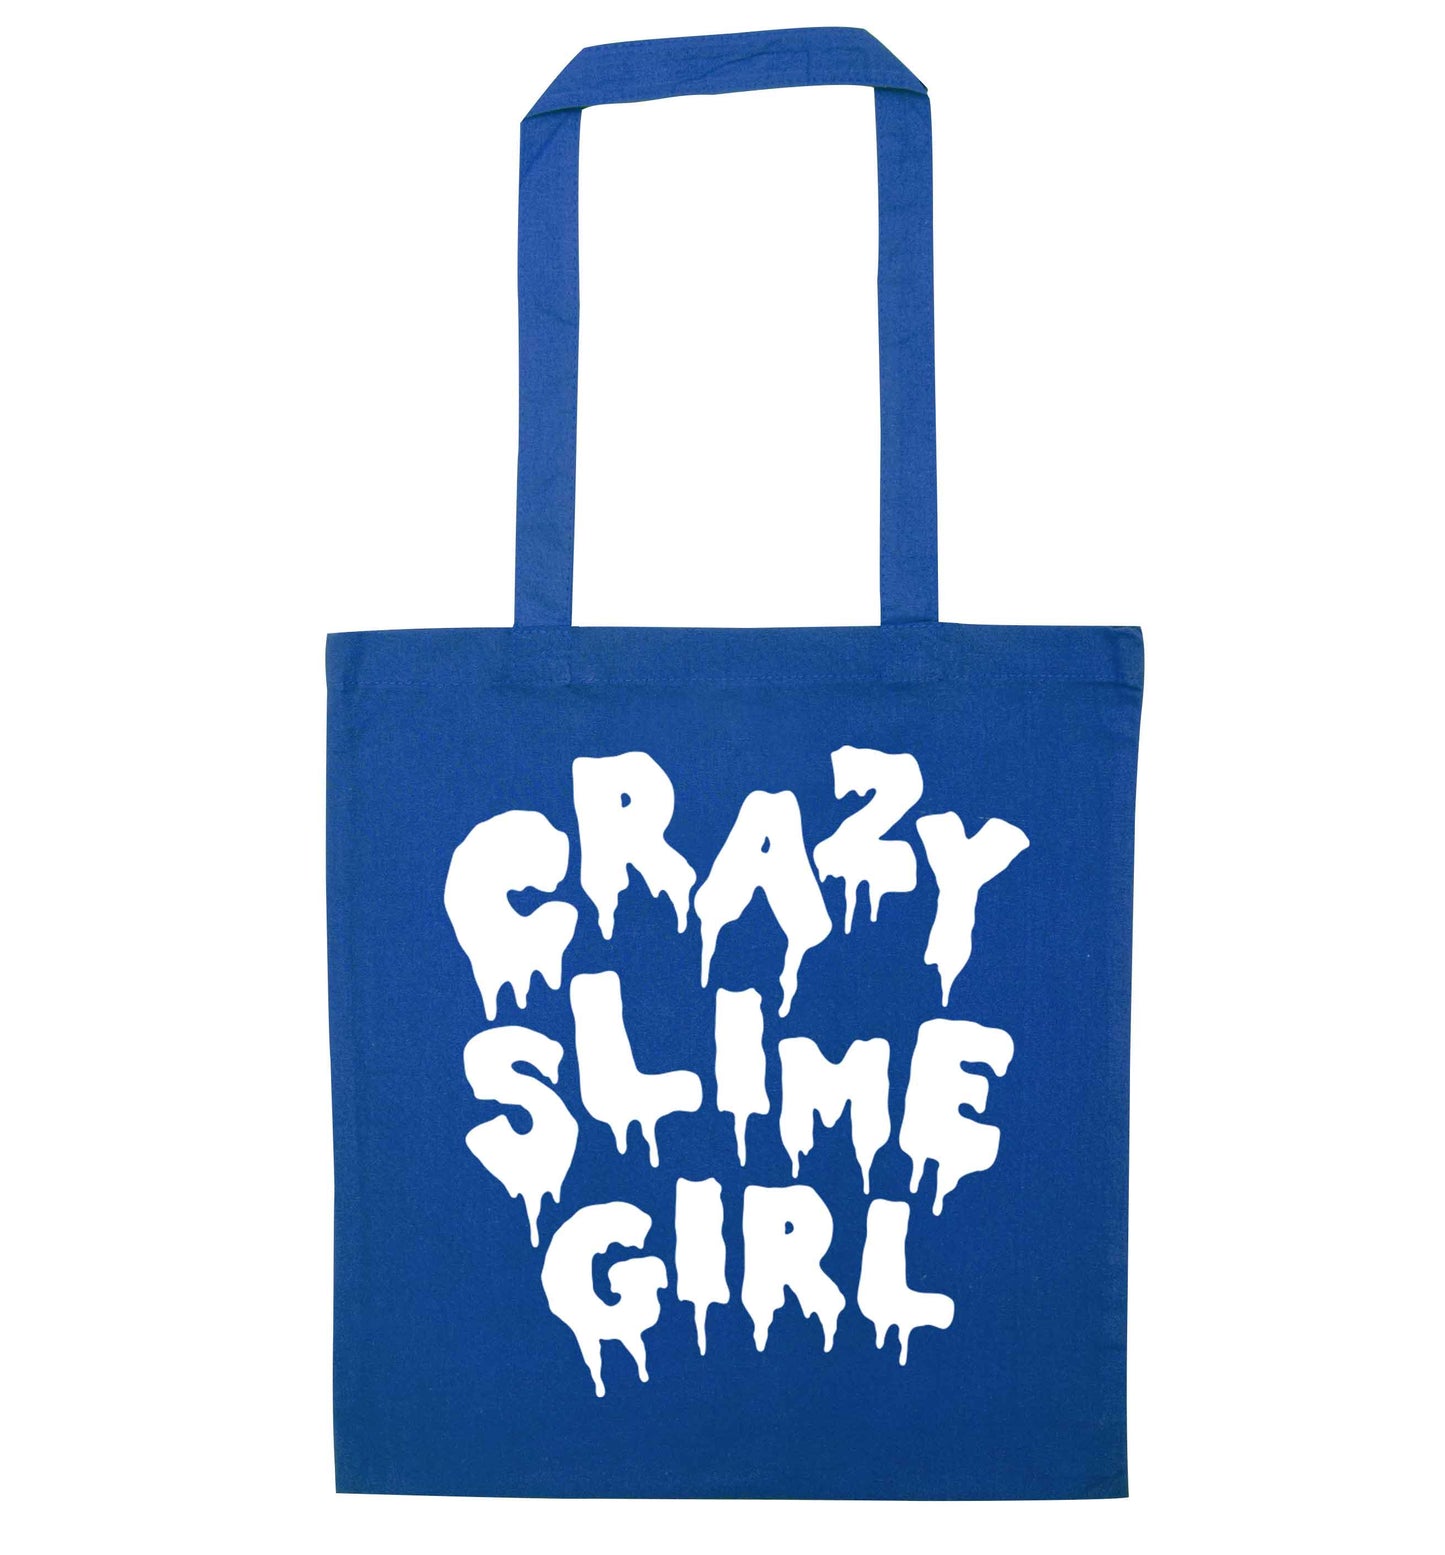 Crazy slime girl blue tote bag